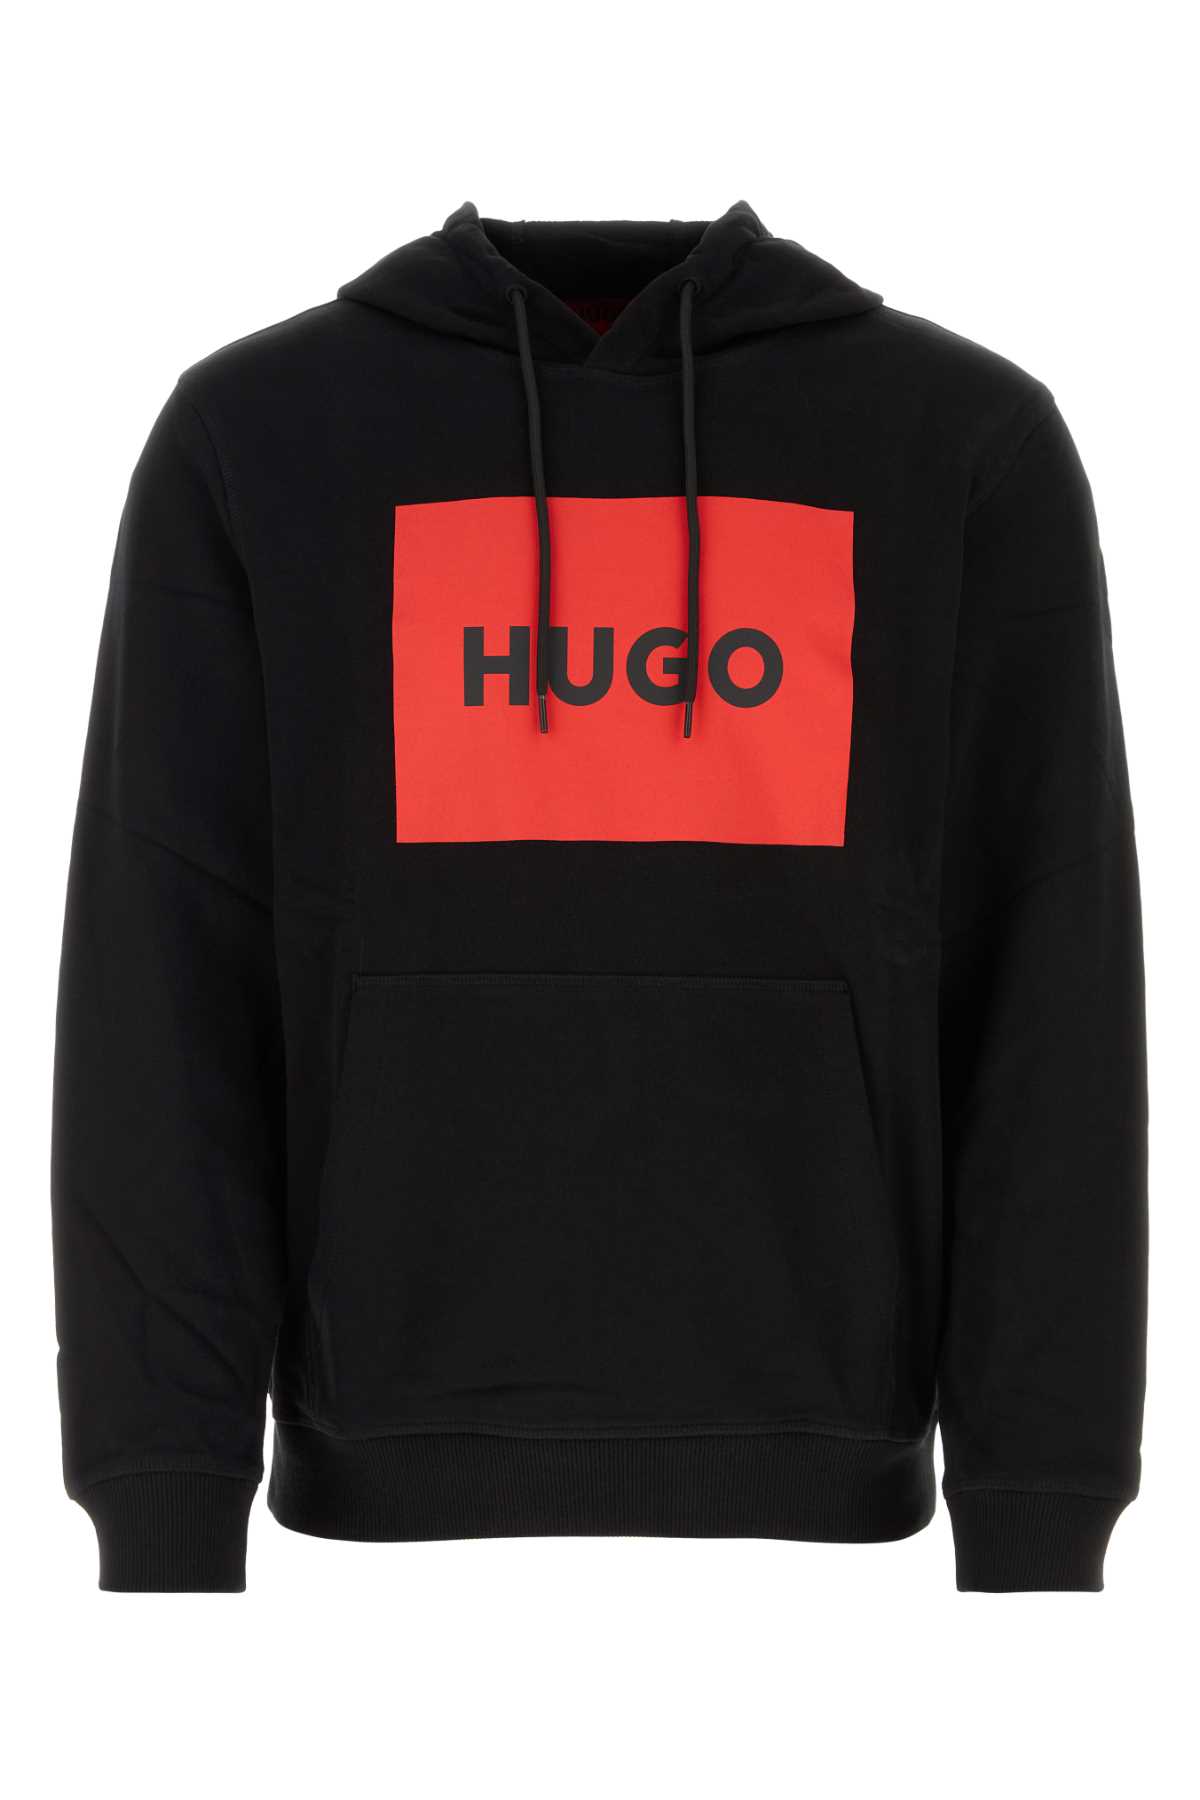 Hugo Boss Black Cotton Sweatshirt